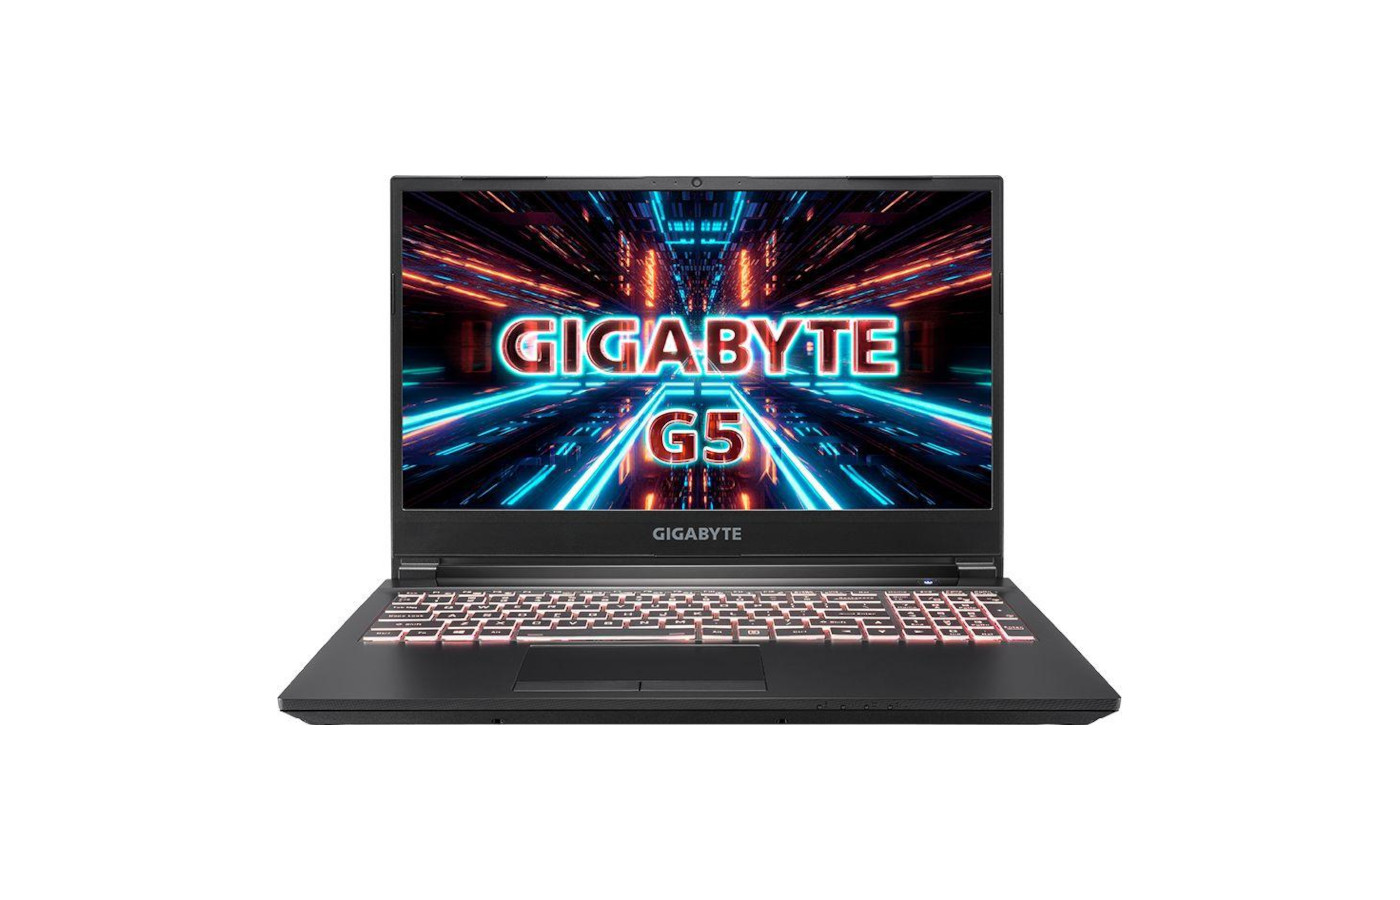 Ноутбук Gigabyte g5 Kc. Gigabyte g5 Kc-5ru1130sh, 15.6". Gigabyte g5 GD-51ru123sd. Gigabyte g5 GD-51de123sd 15.6"FHD i5-11400h rtx3050. Gigabyte g5 kc